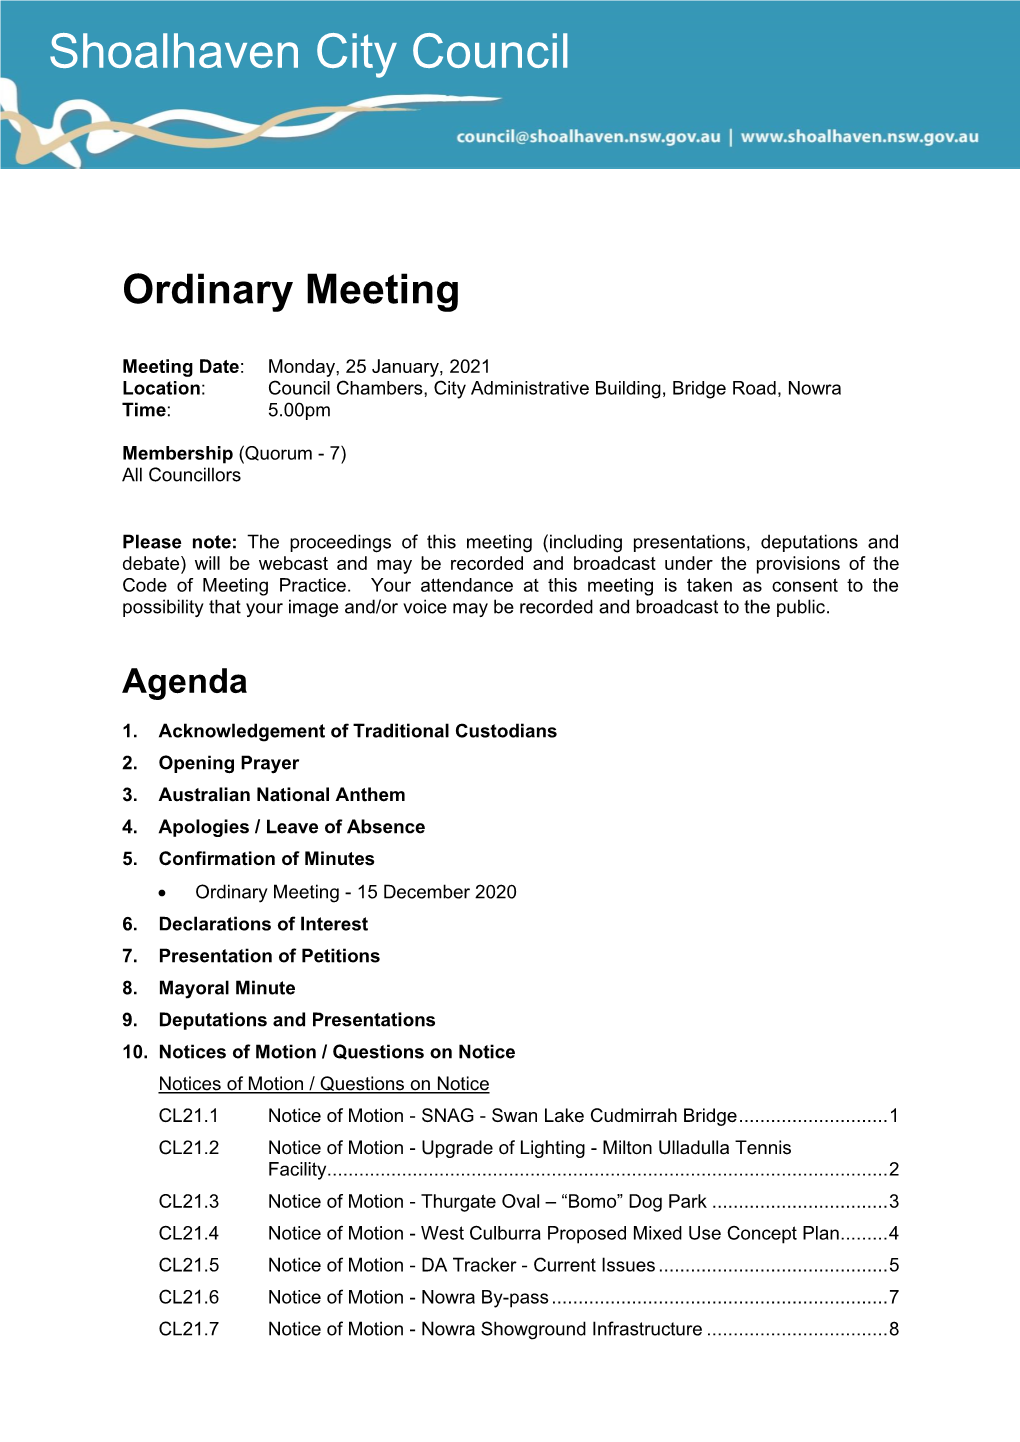 Agenda of Ordinary Meeting